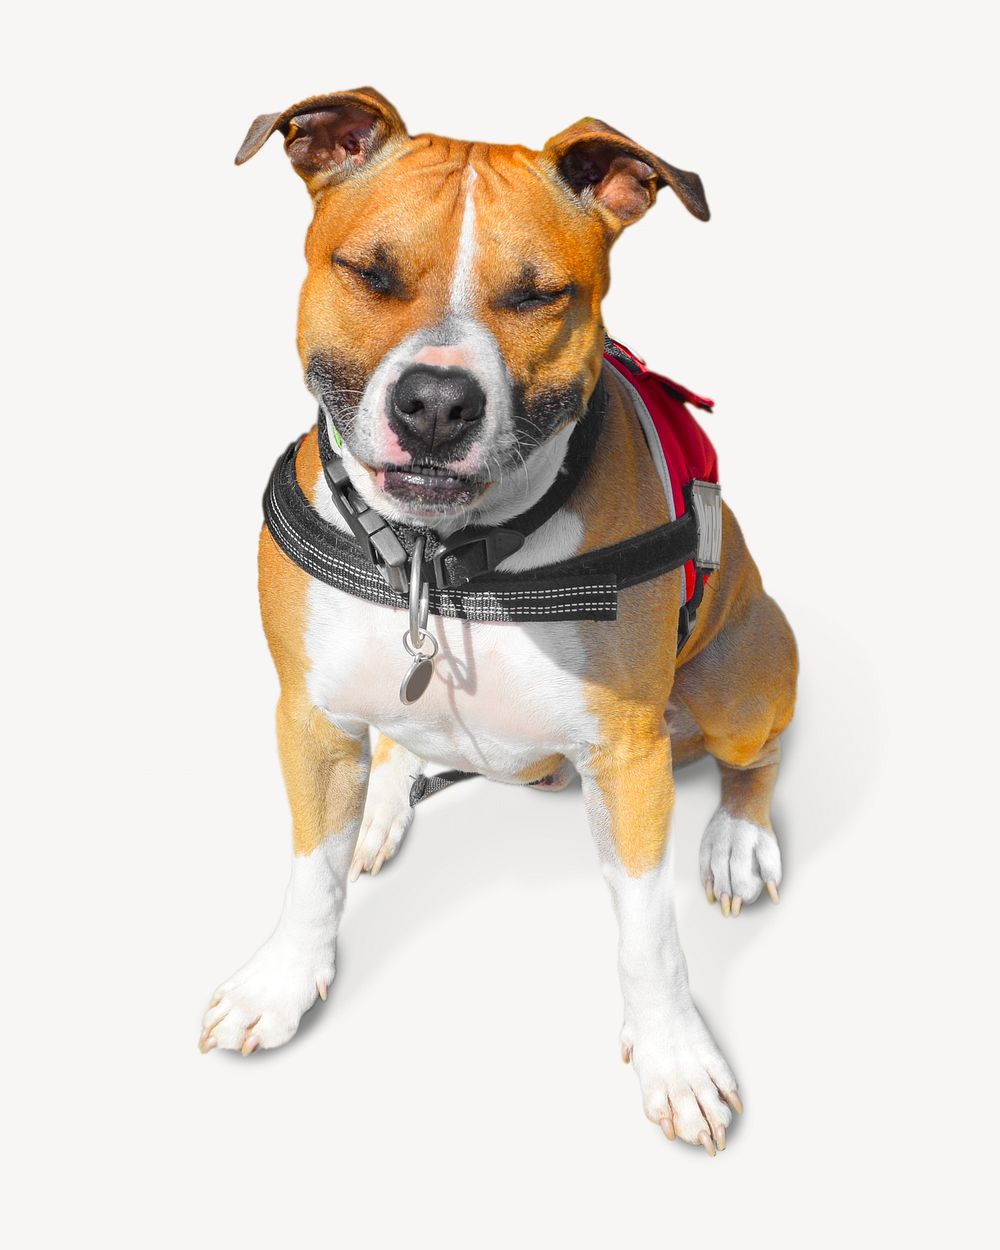 Staffordshire Bull Terrier dog, pet animal image